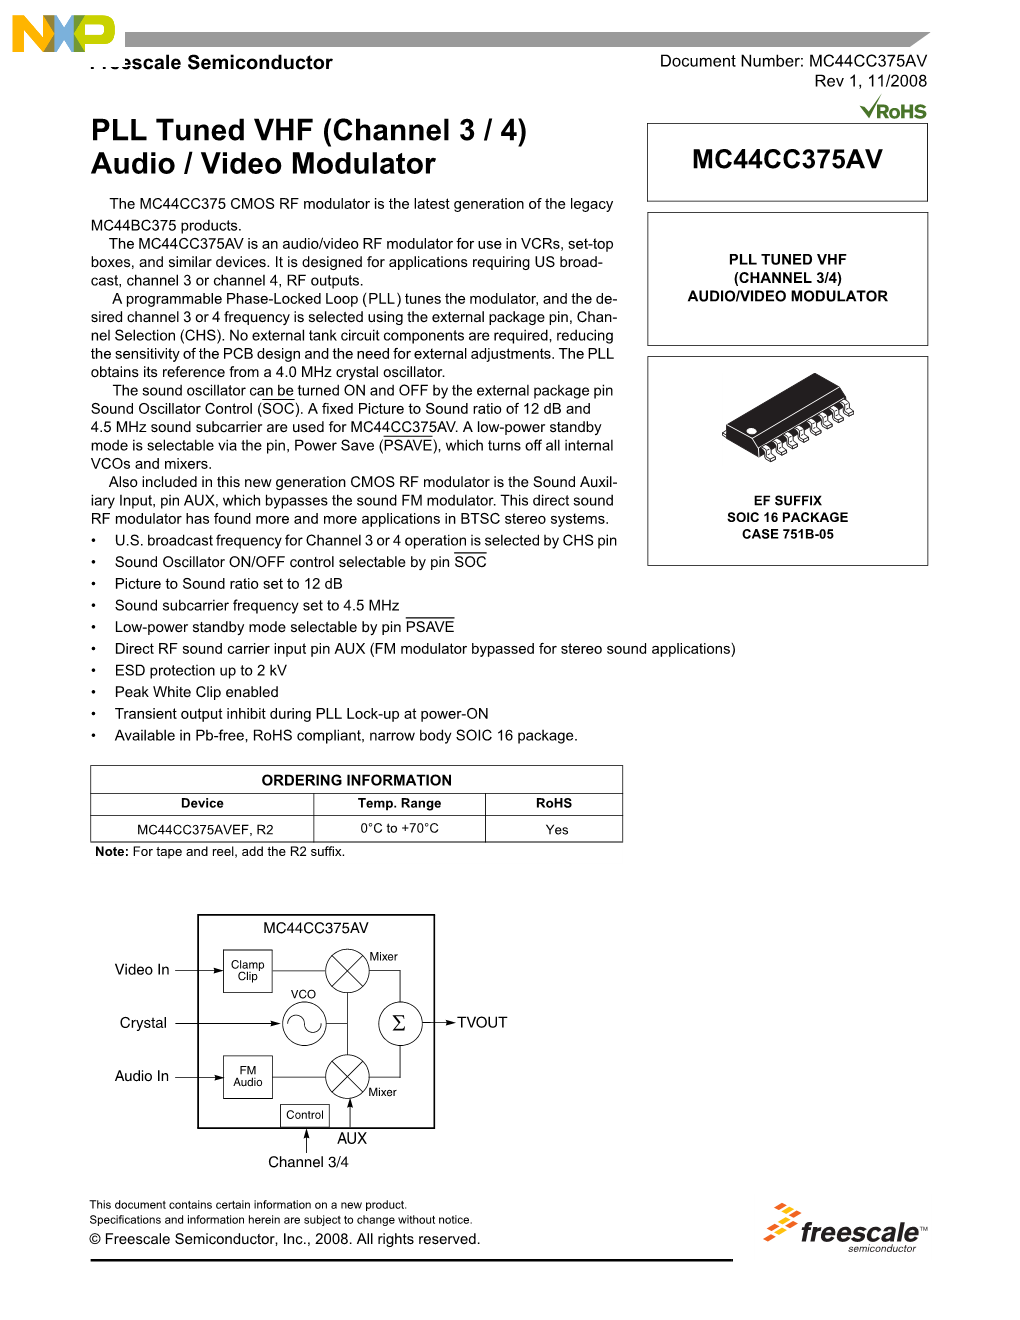 PLL Tuned VHF (Channel 3 / 4) Audio / Video Modulator MC44CC375AV